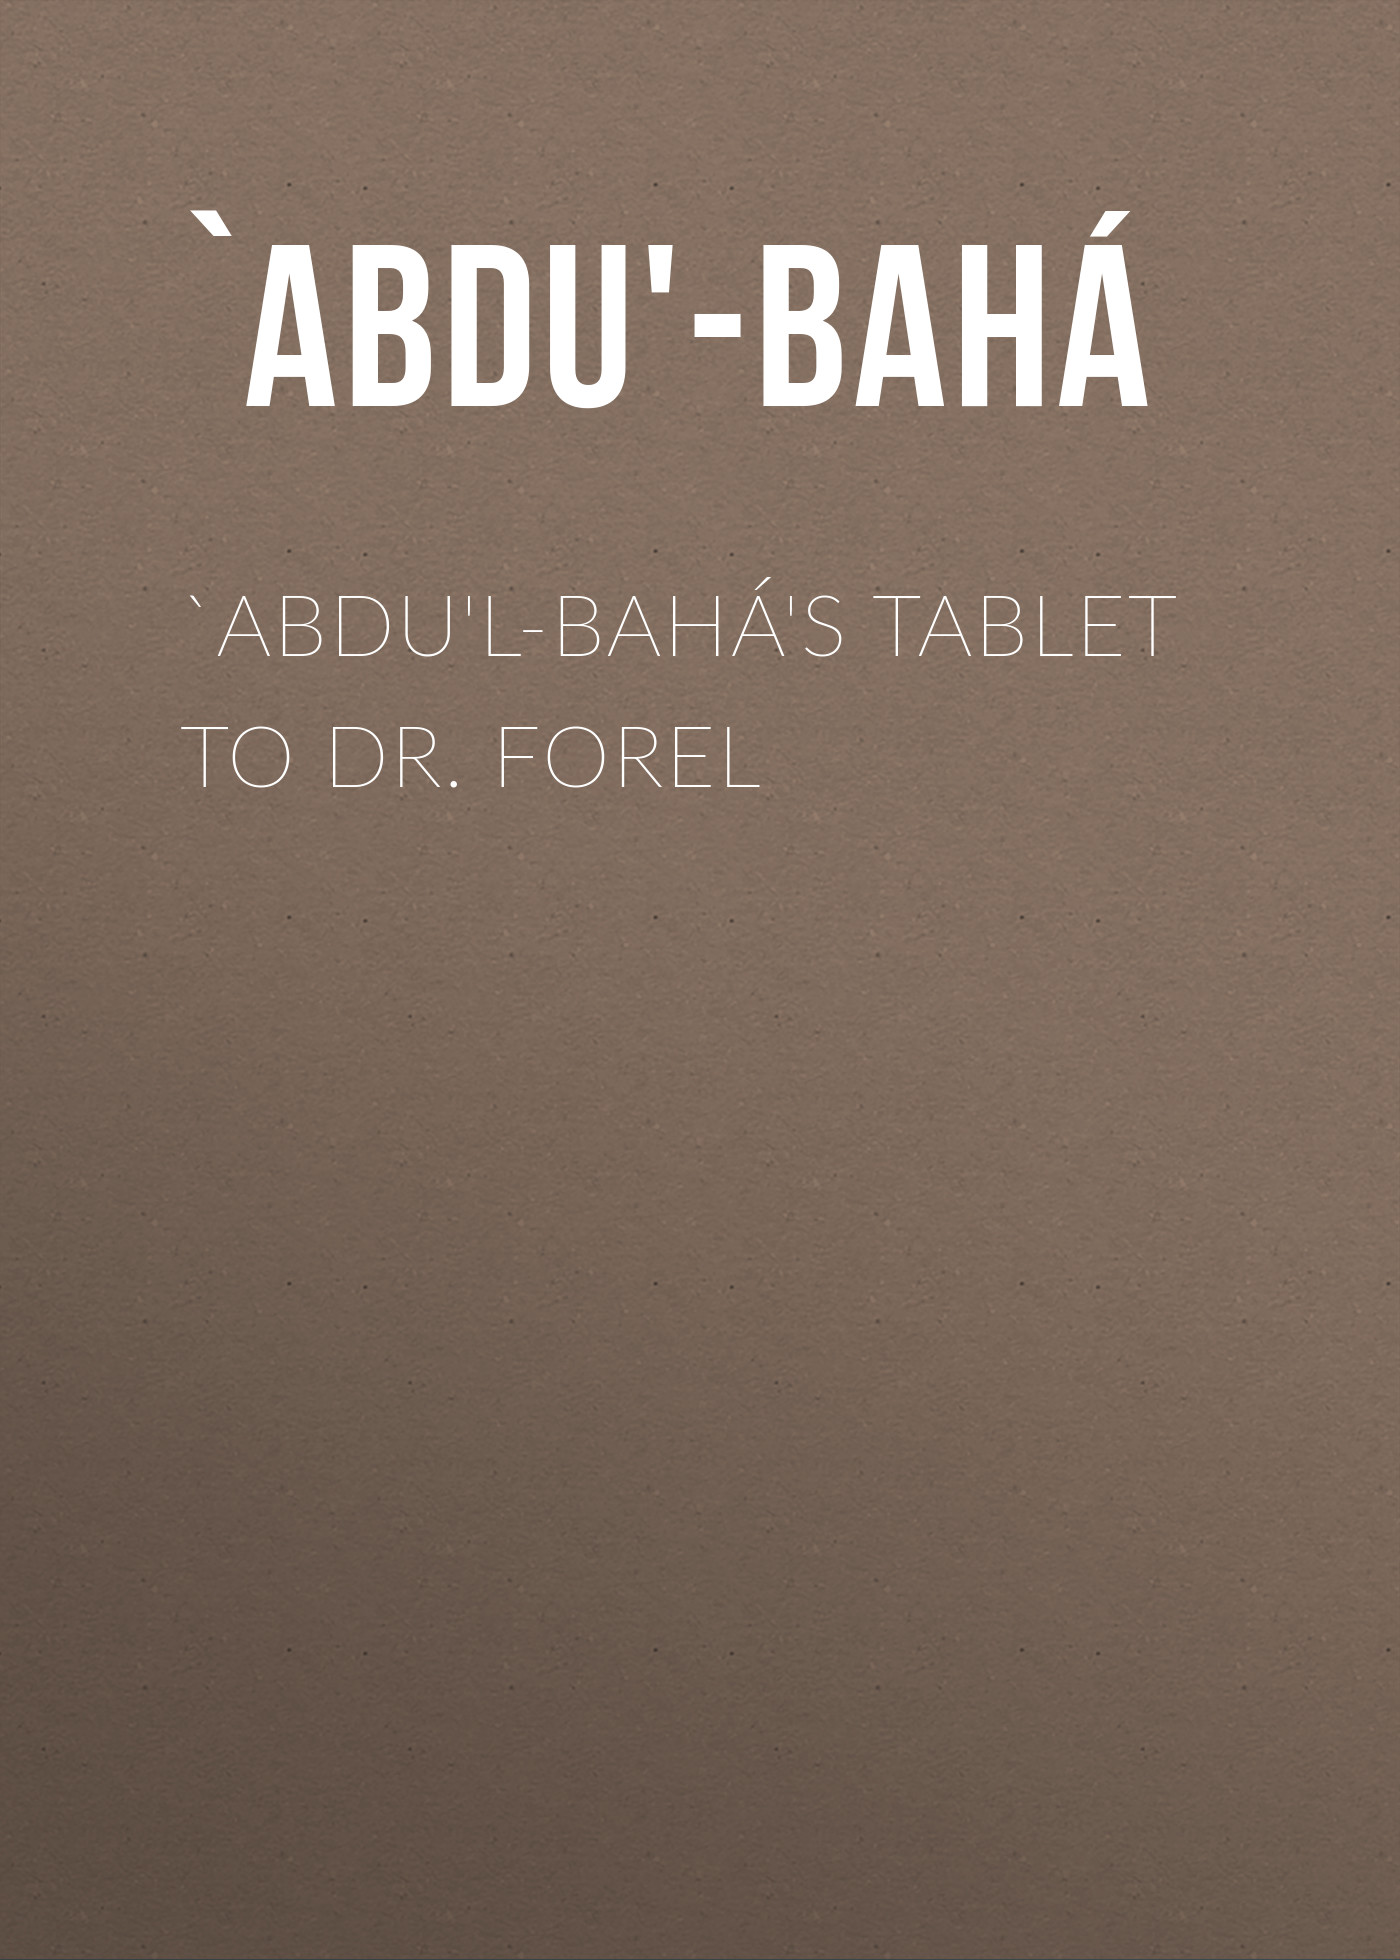 `Abdu'l-Bahá's Tablet to Dr. Forel